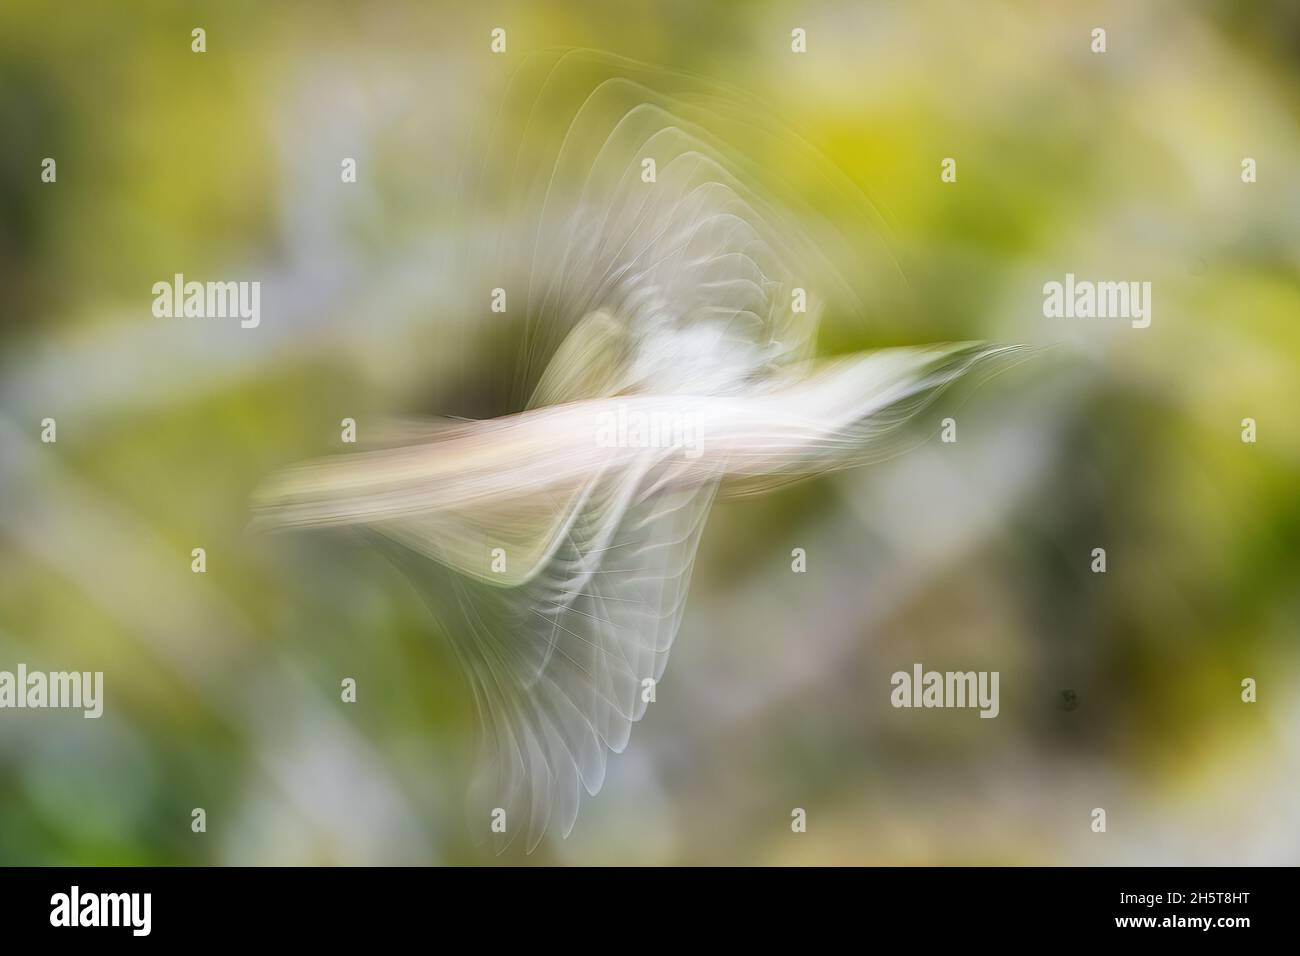 Bird flight image abstract impression Stock Photo